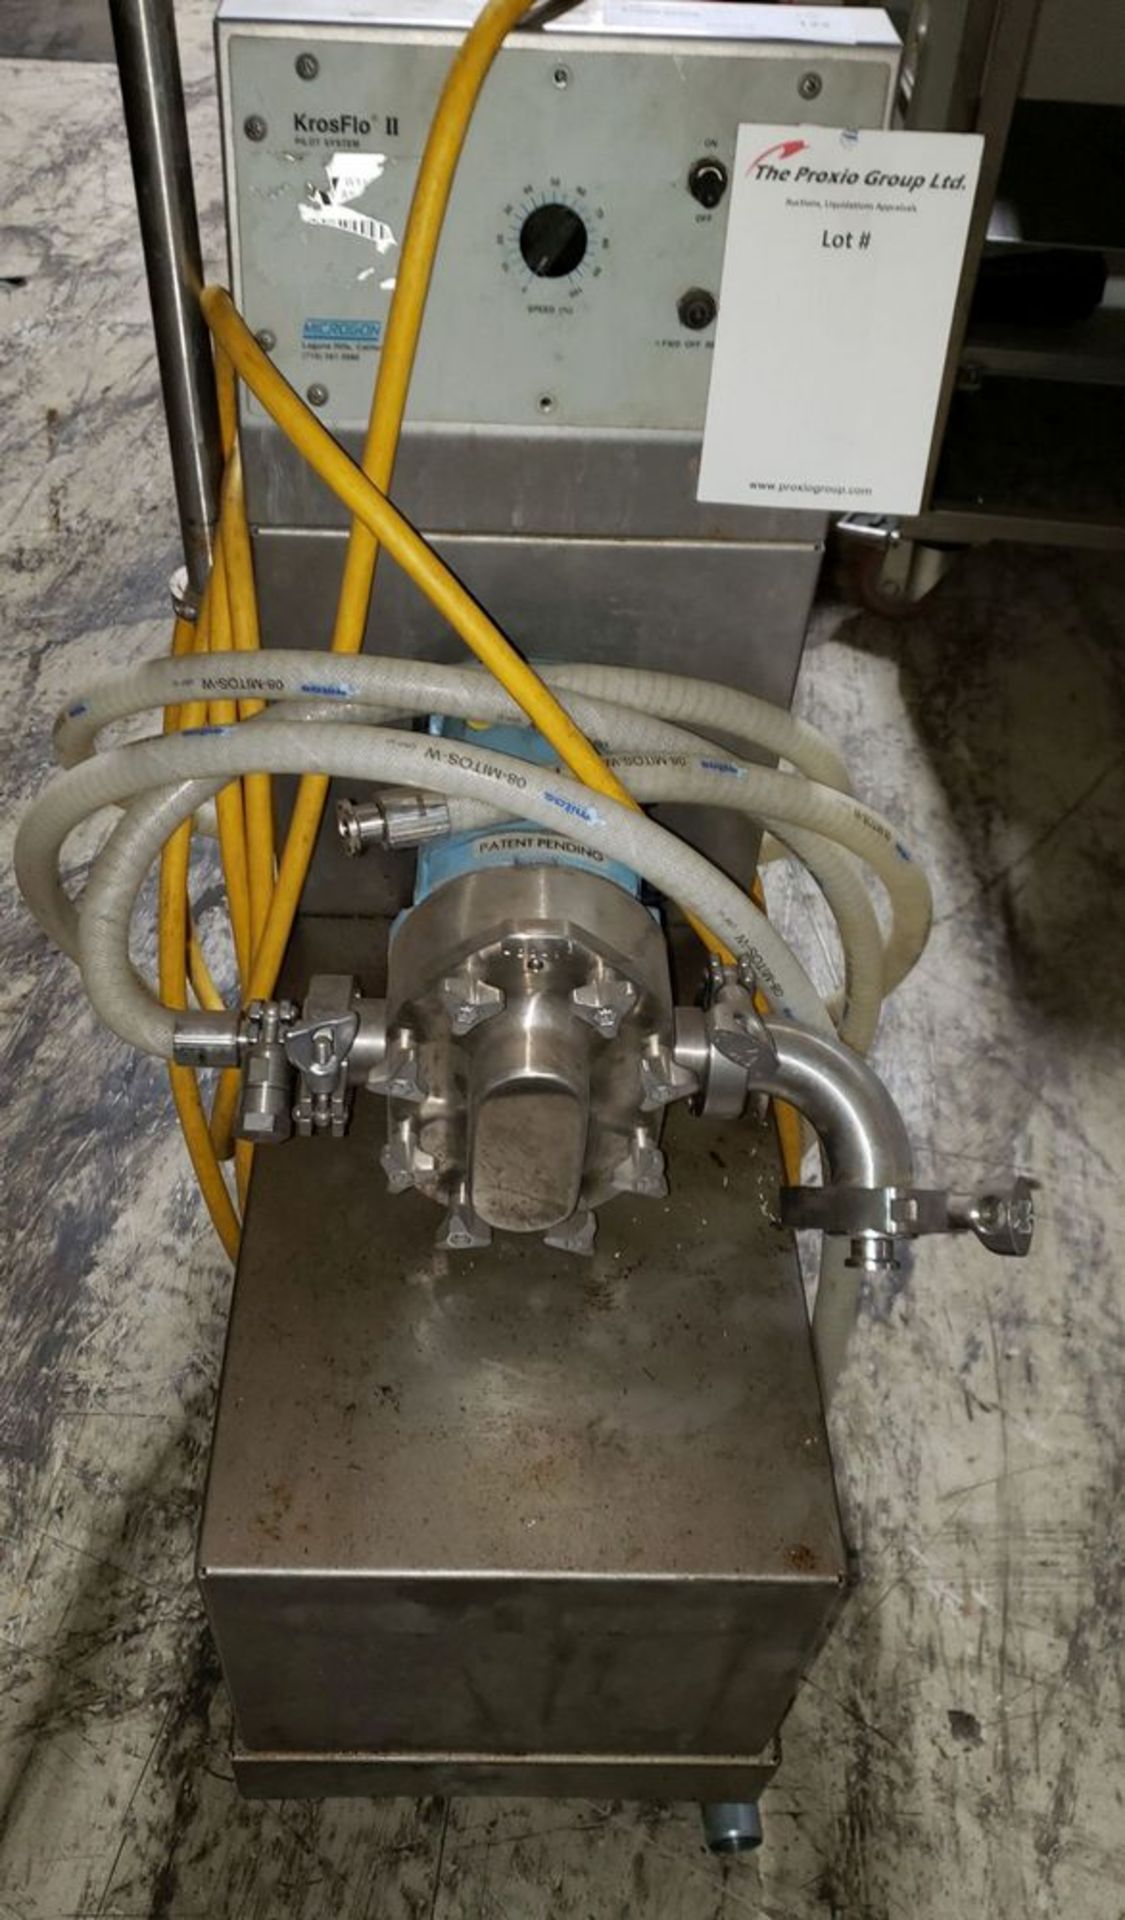 KrosFlo II pump system, consisting of Waukesha Cherry-Burell rotary lobe pump, model 018,